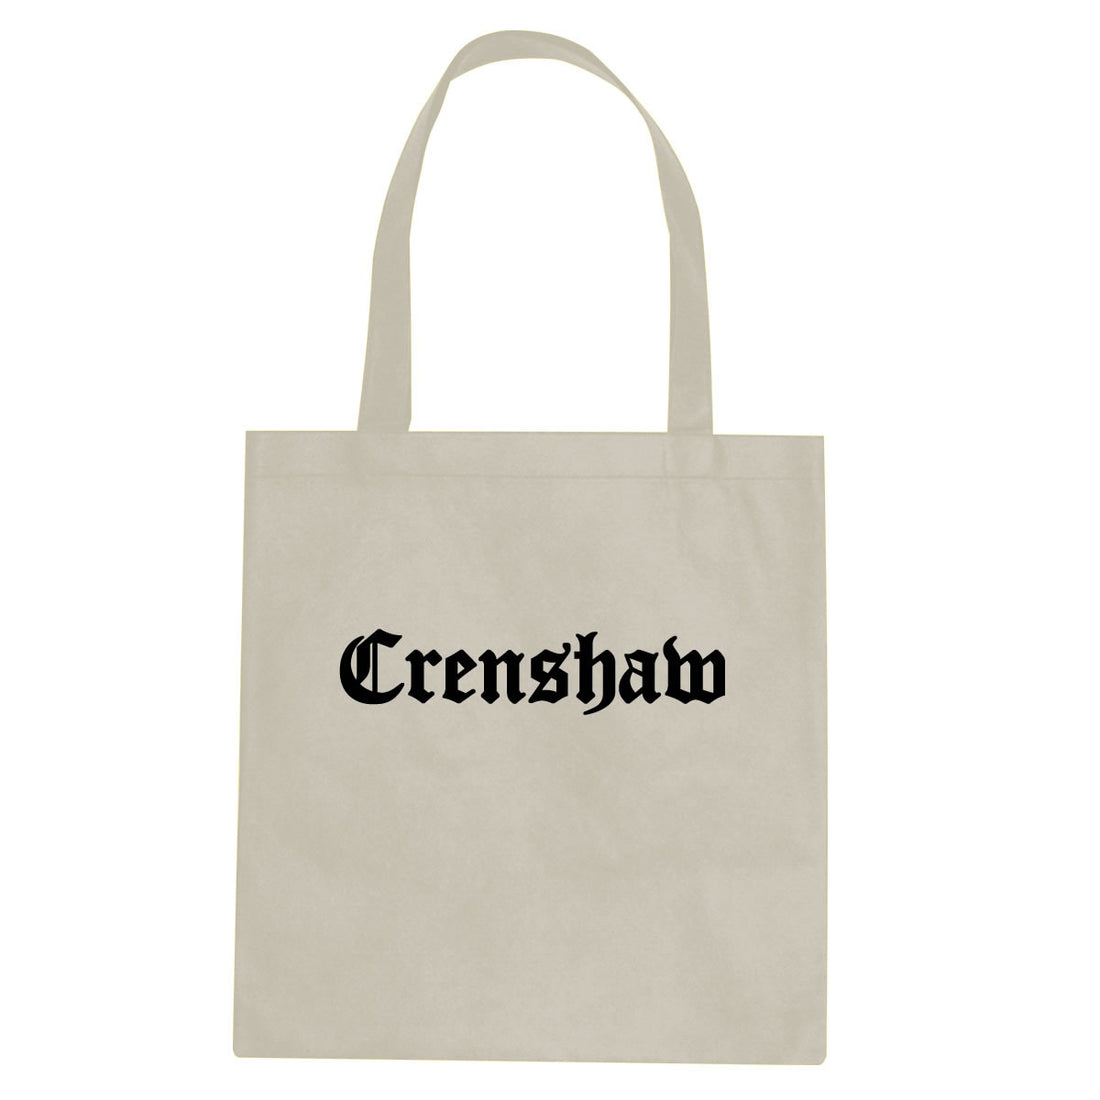 Crenshaw Old English California Tote Bag By Kings Of NY